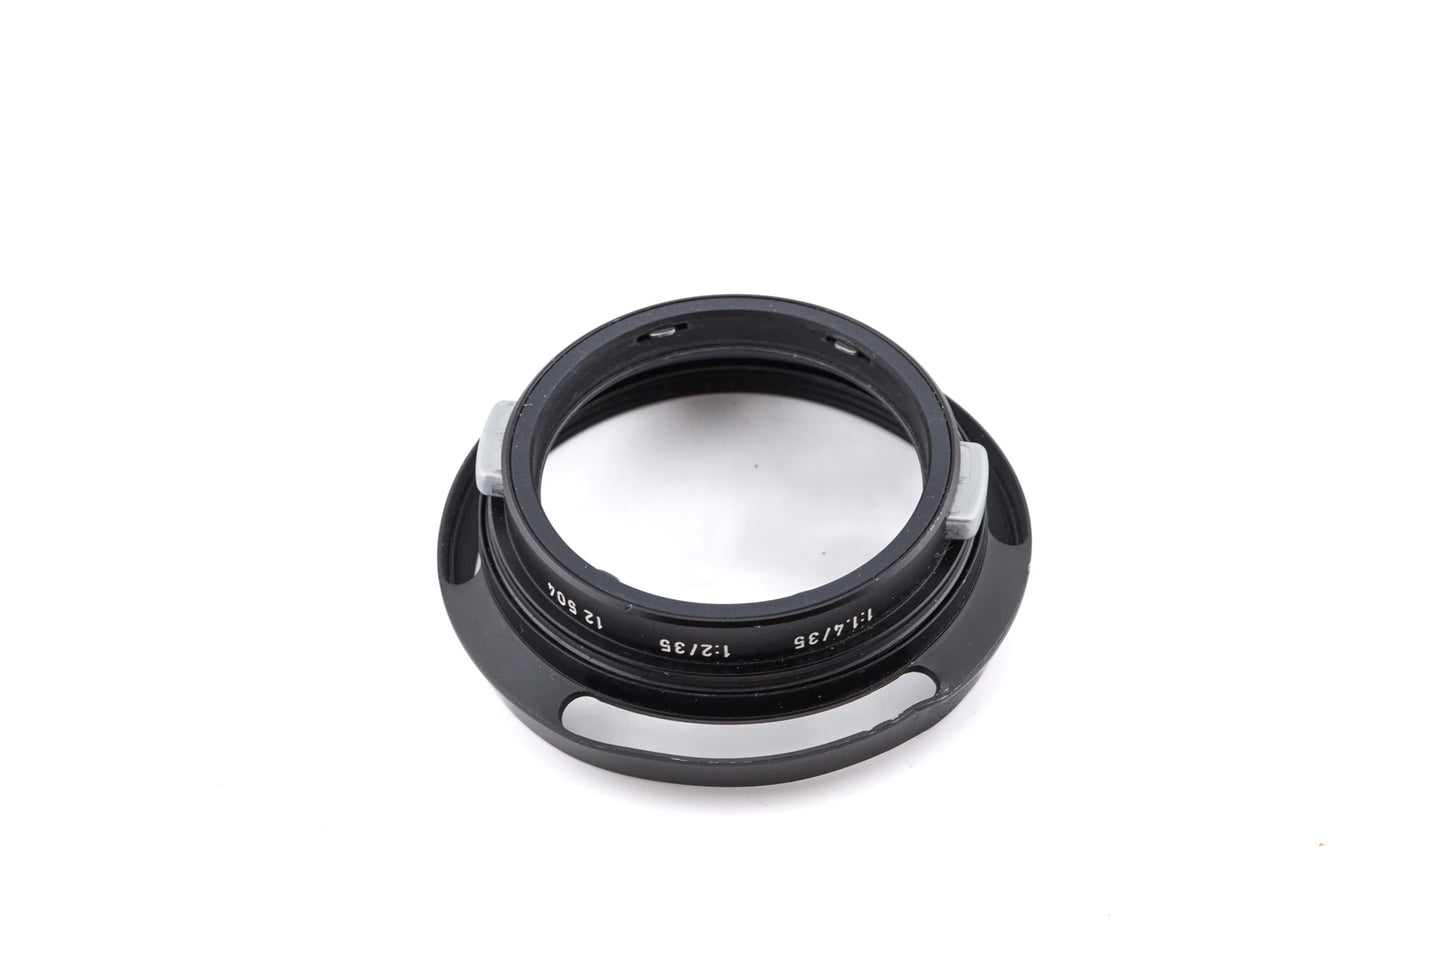 Leica Lens Hood (12504)